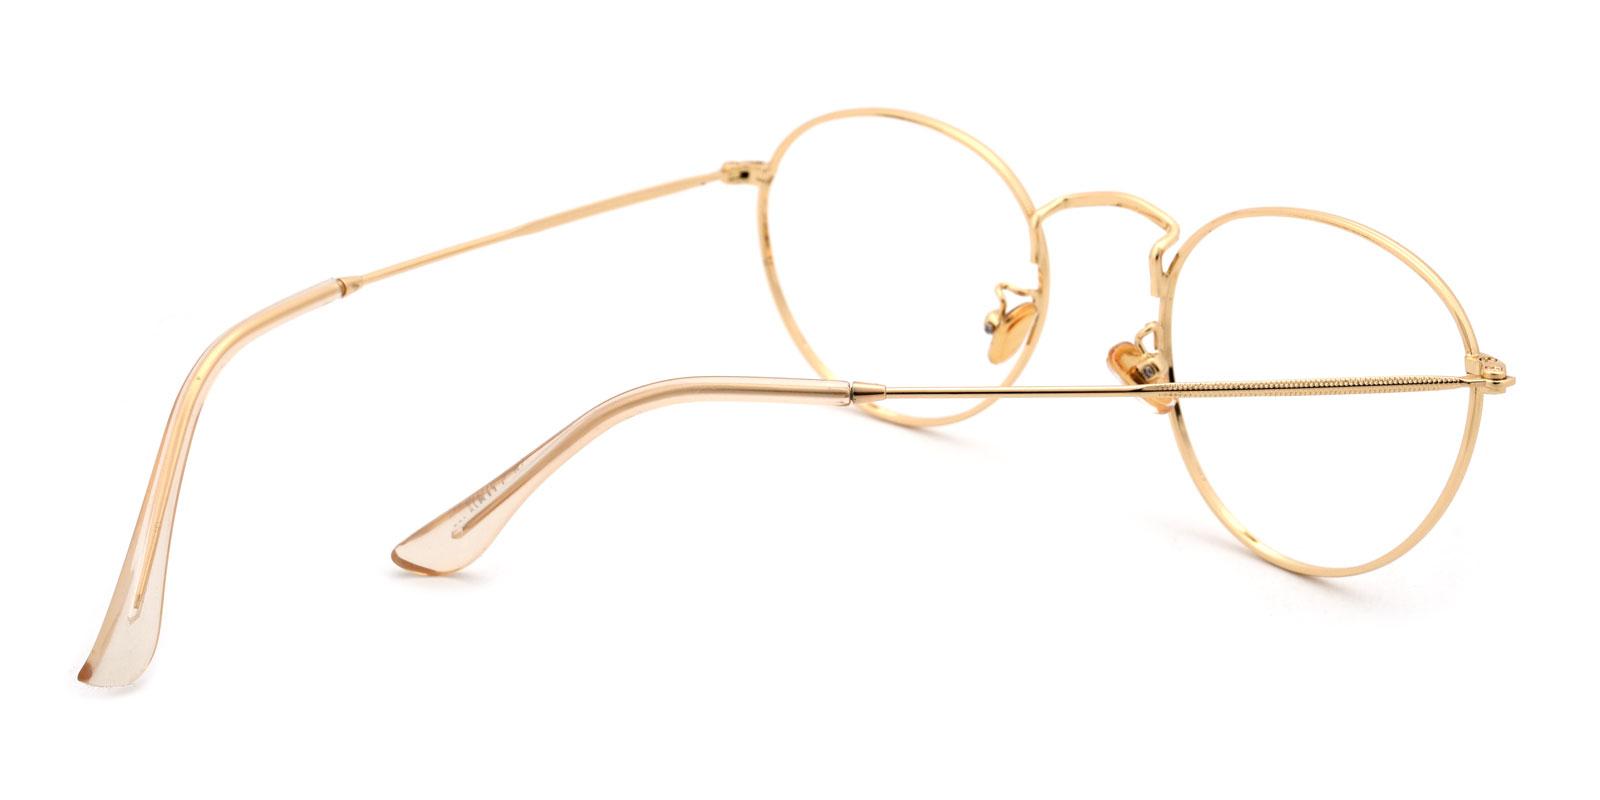 Canary-Translucent-Round-Metal-Eyeglasses-detail